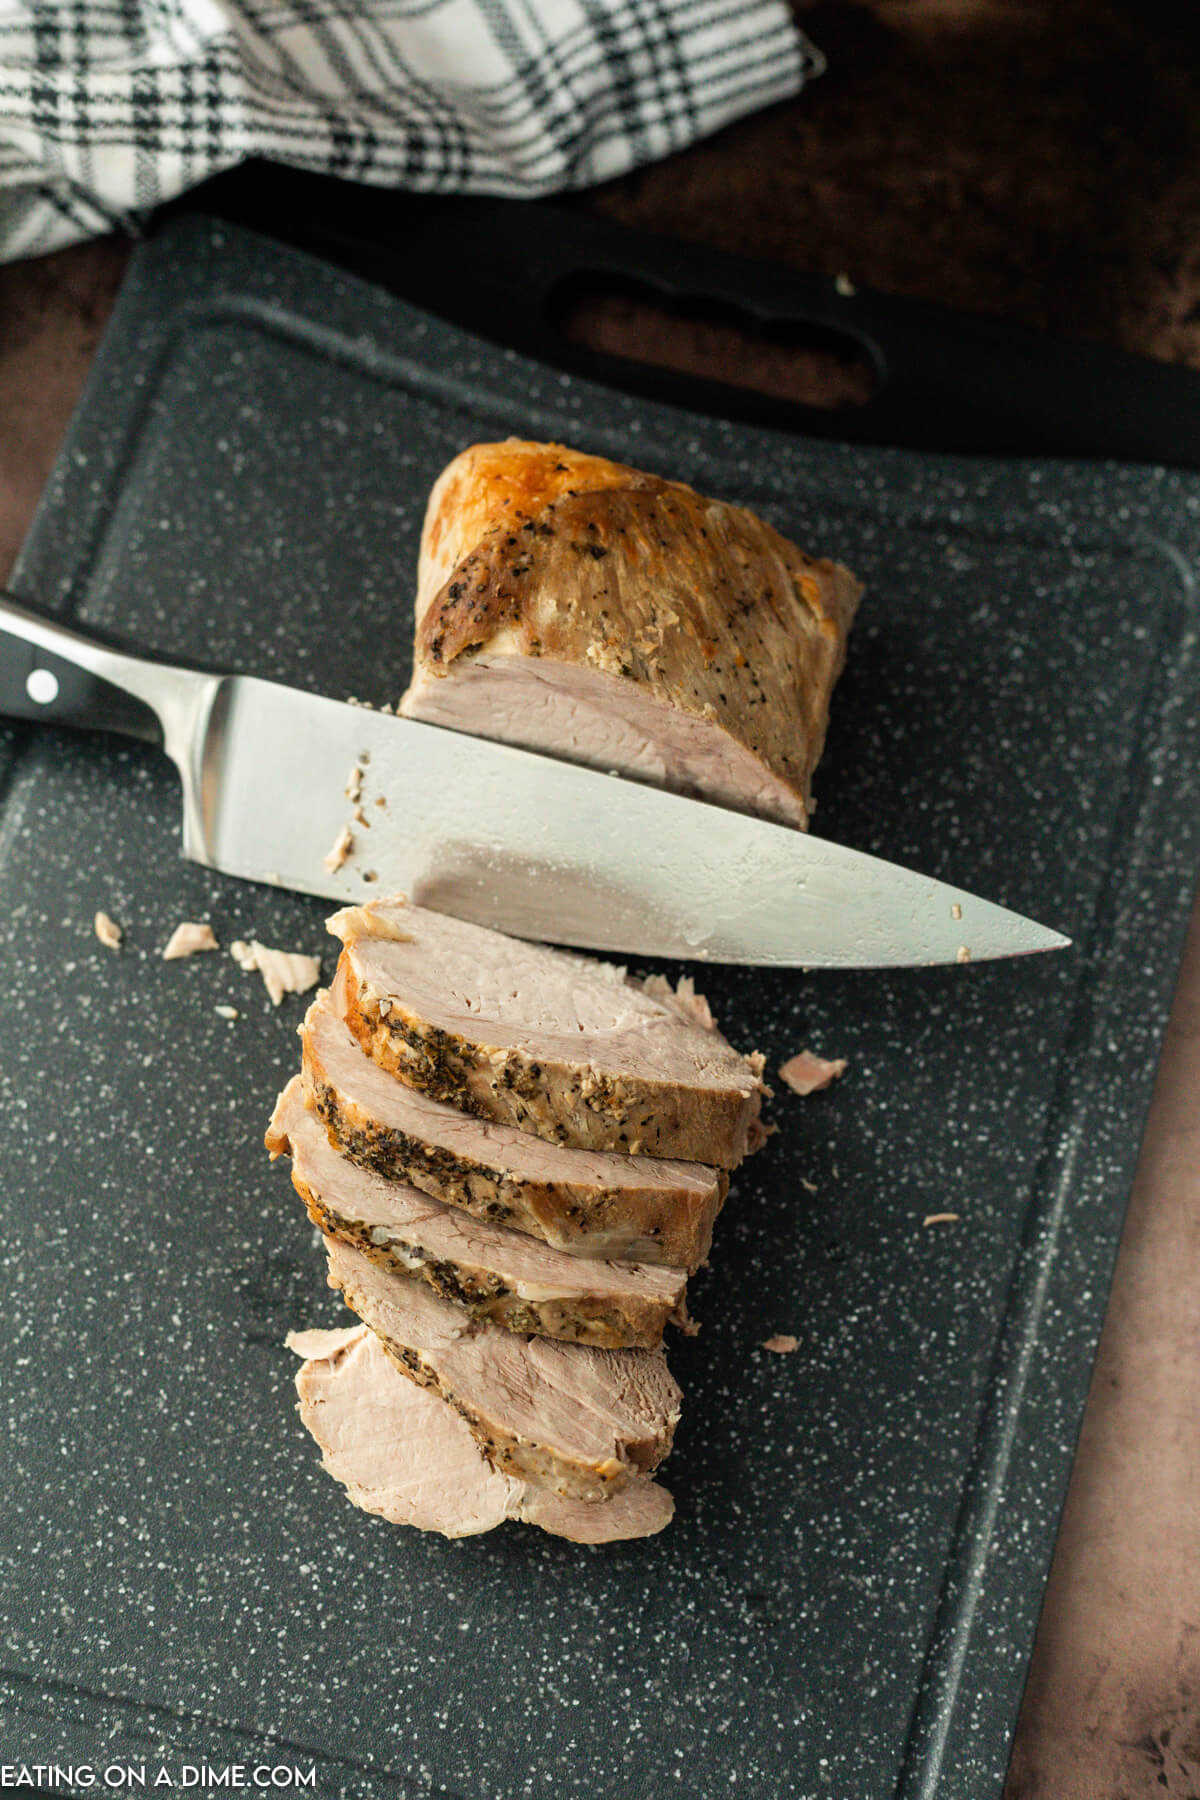 The pork roast being sliced on a cutting board.  